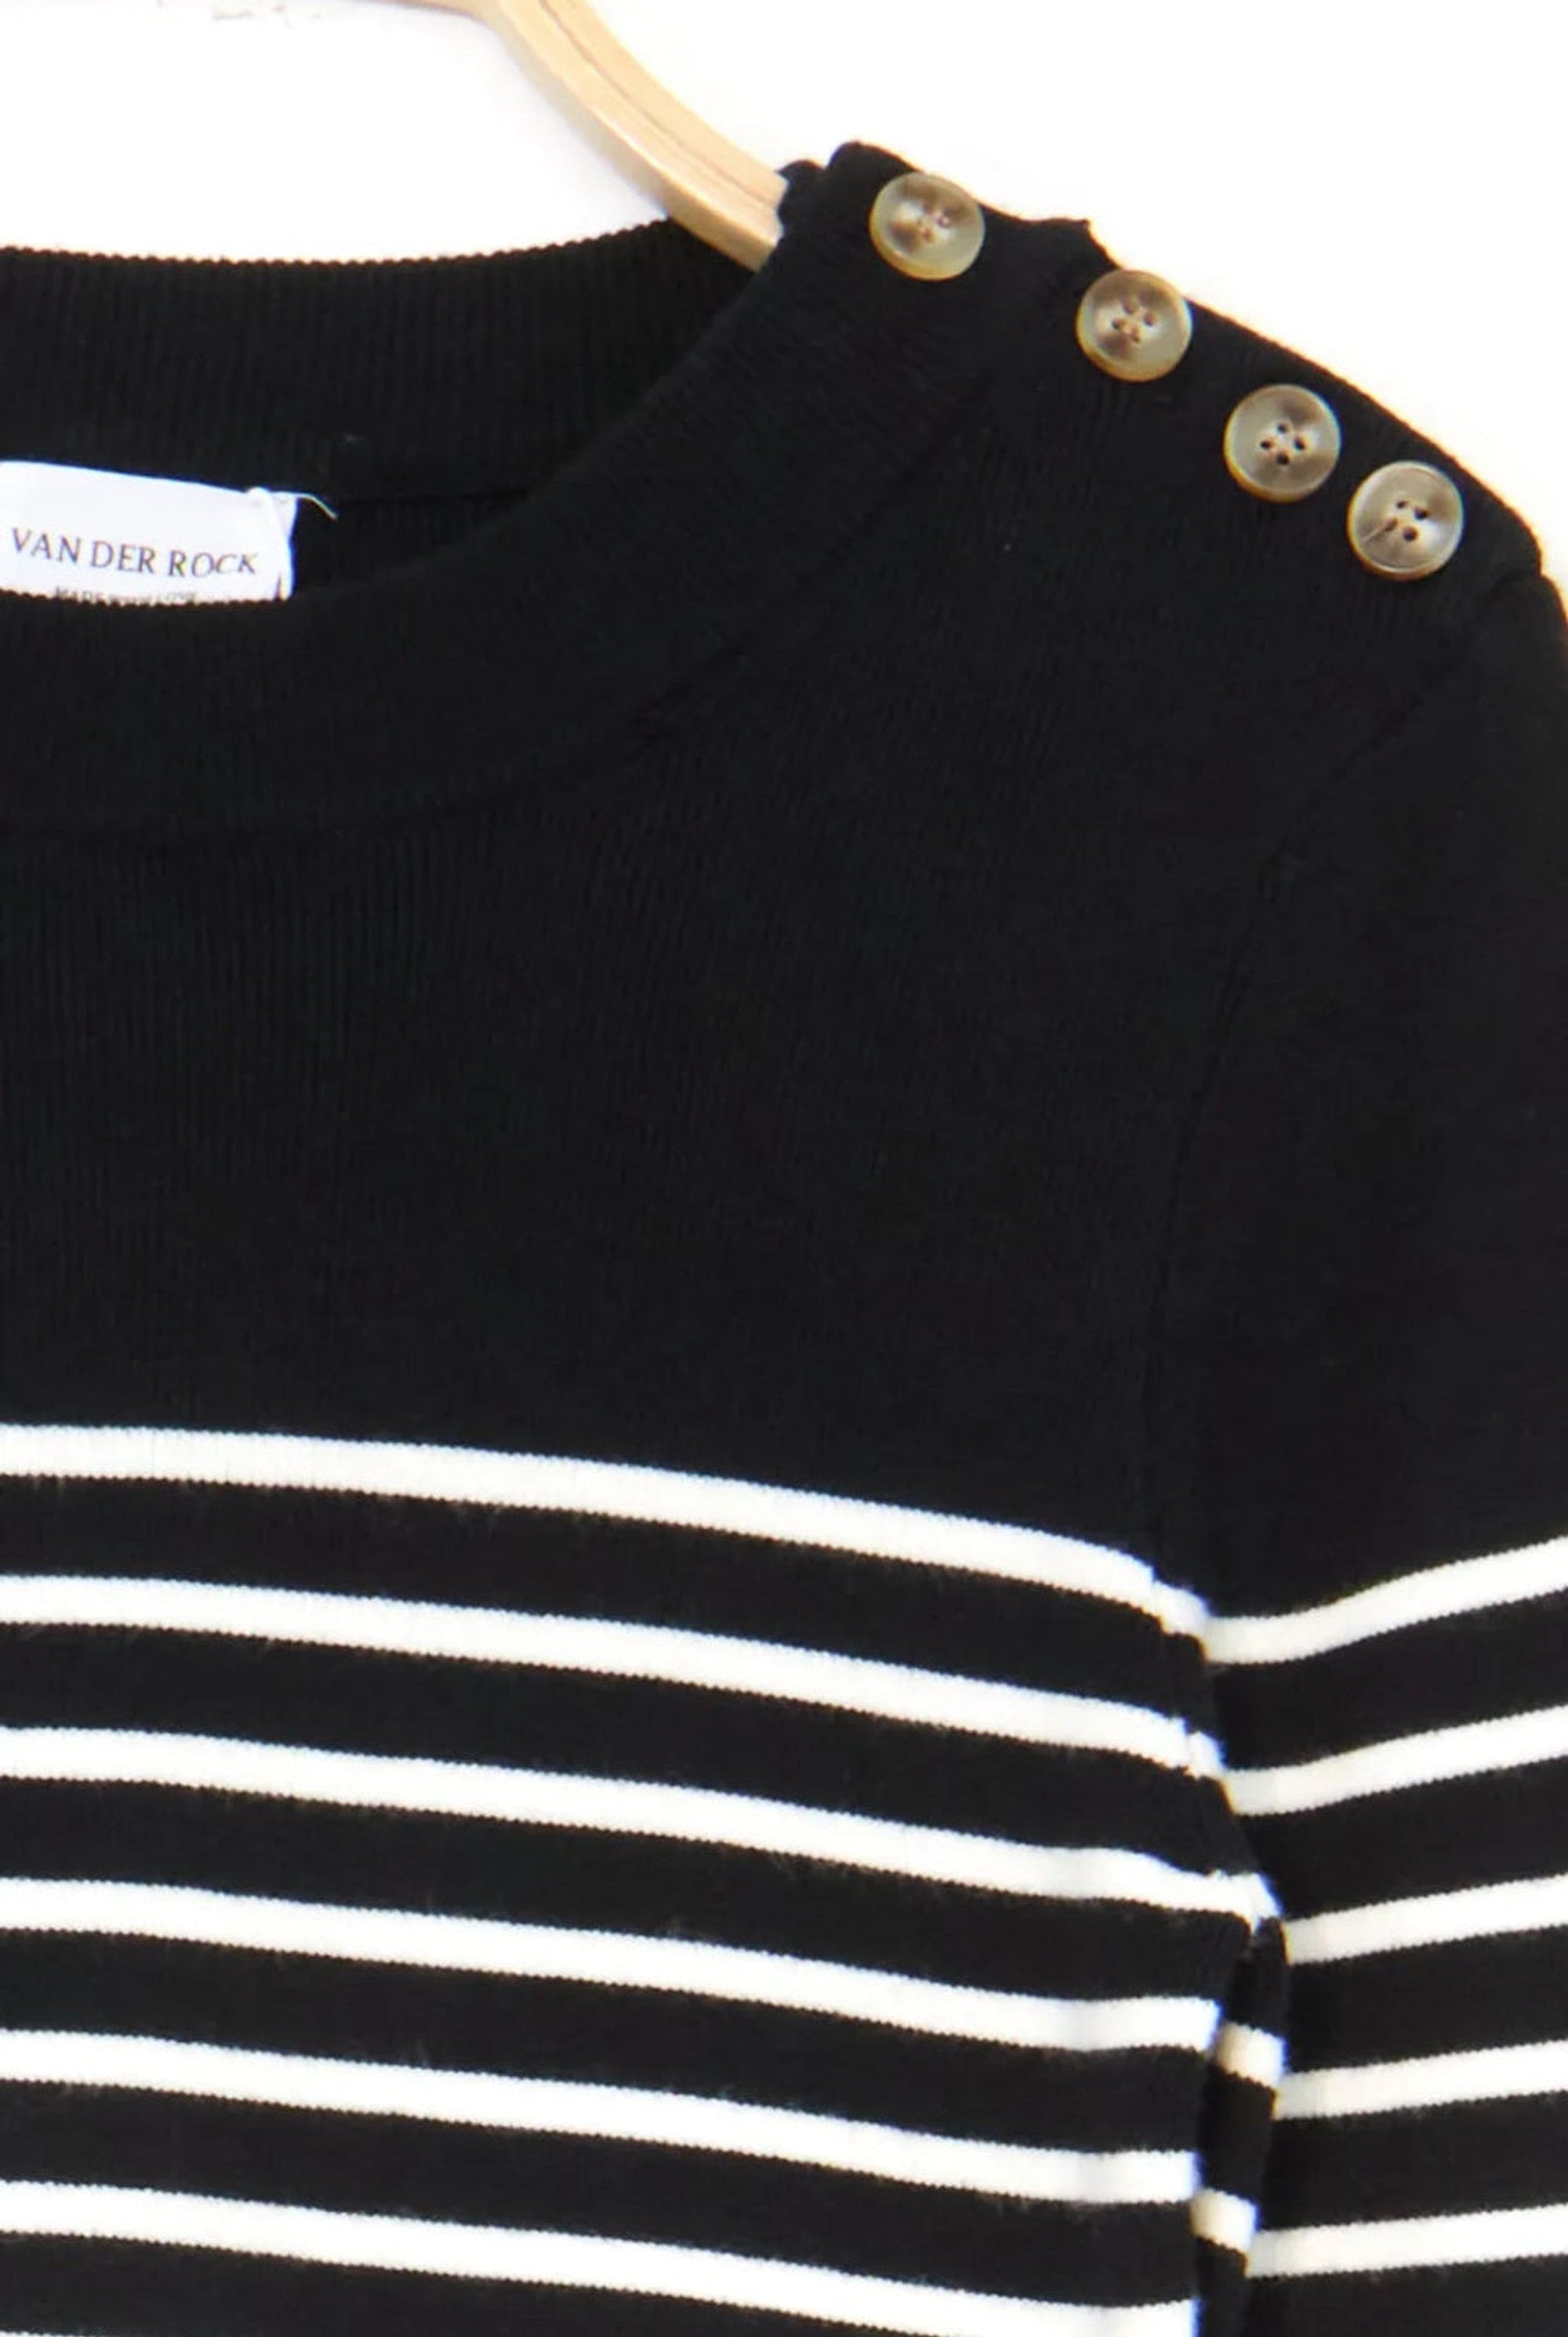 Van Der Rock French Sailor Knit in Black or White - clever alice